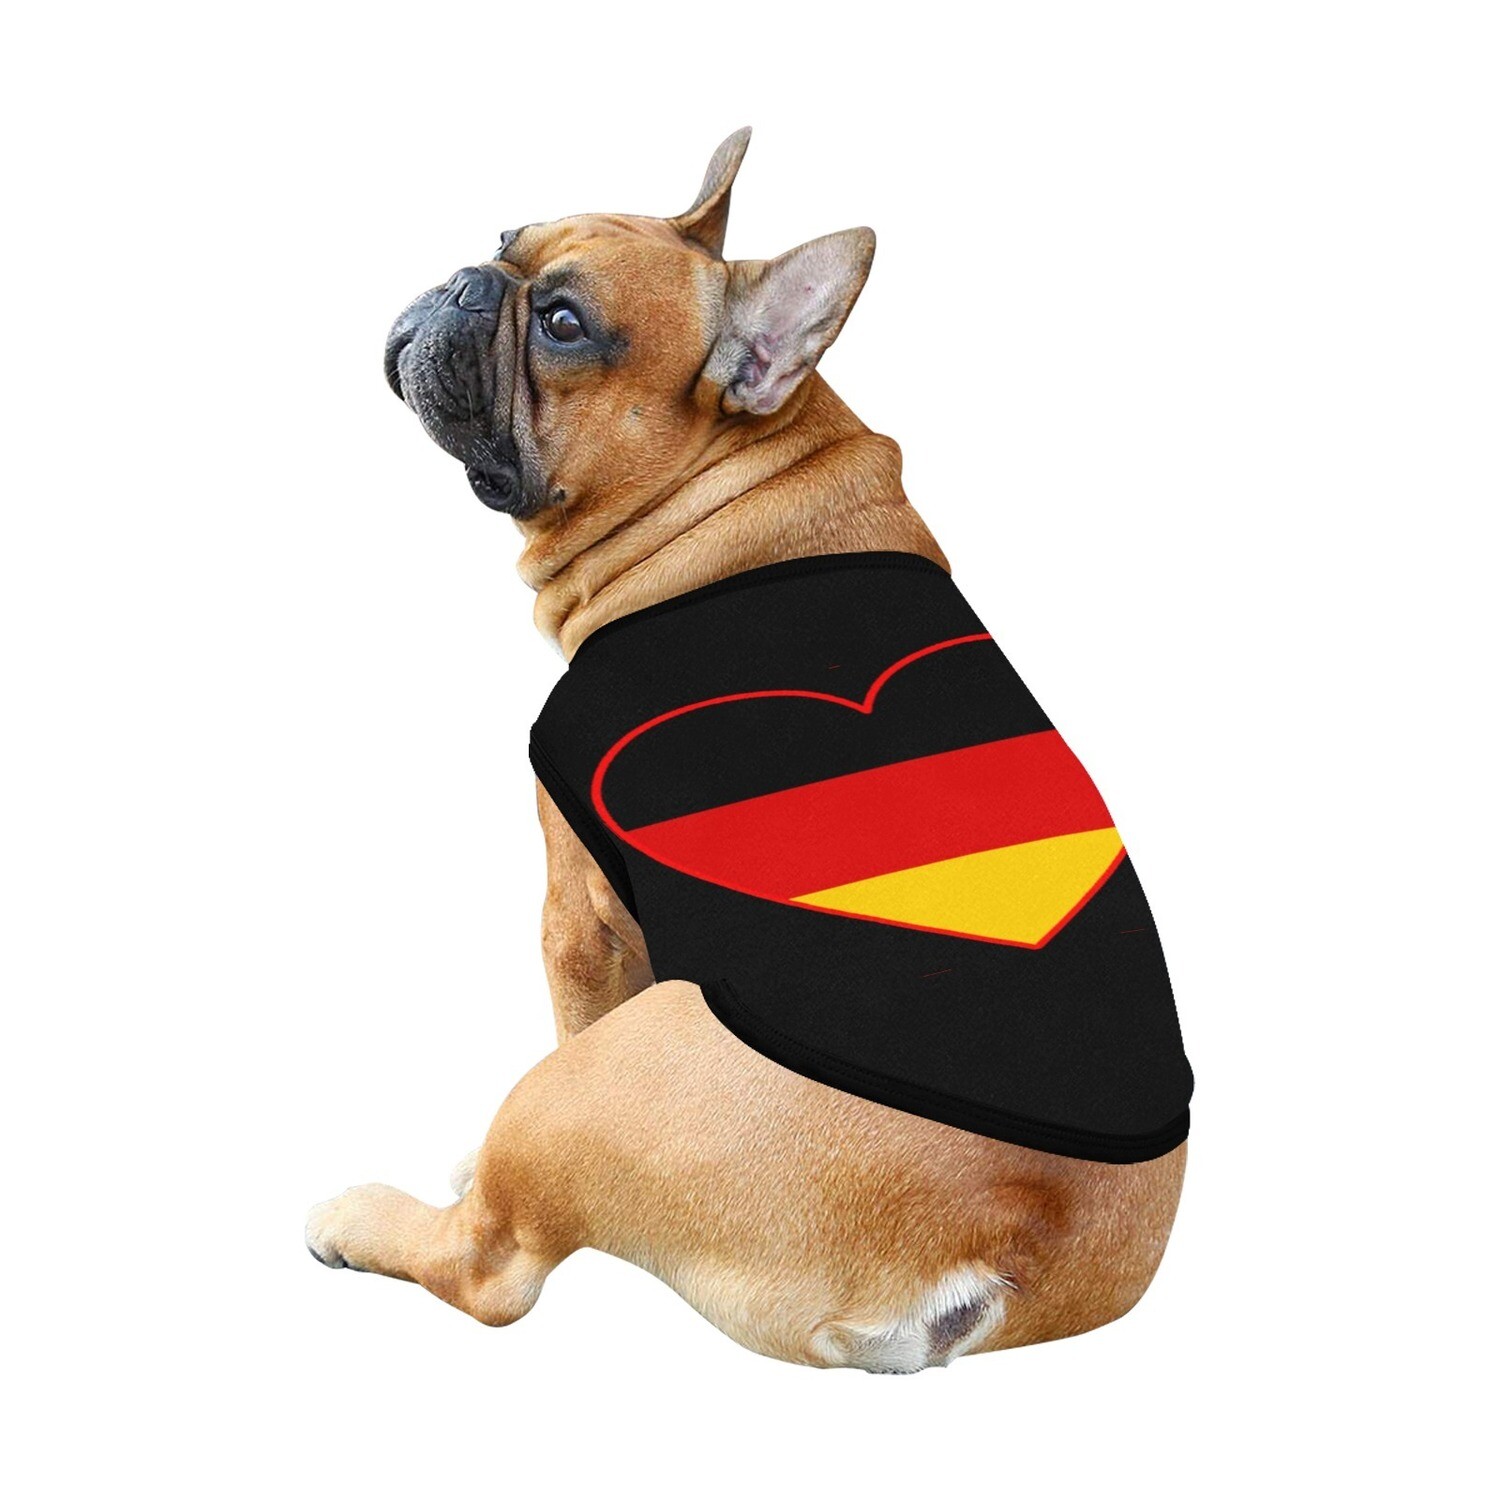 🐕🇩🇪 I love Germany, German flag, dog t-shirt, dog gift, dog tank top, dog shirt, dog clothes, gift, 7 sizes XS to 3XL, heart shape, black